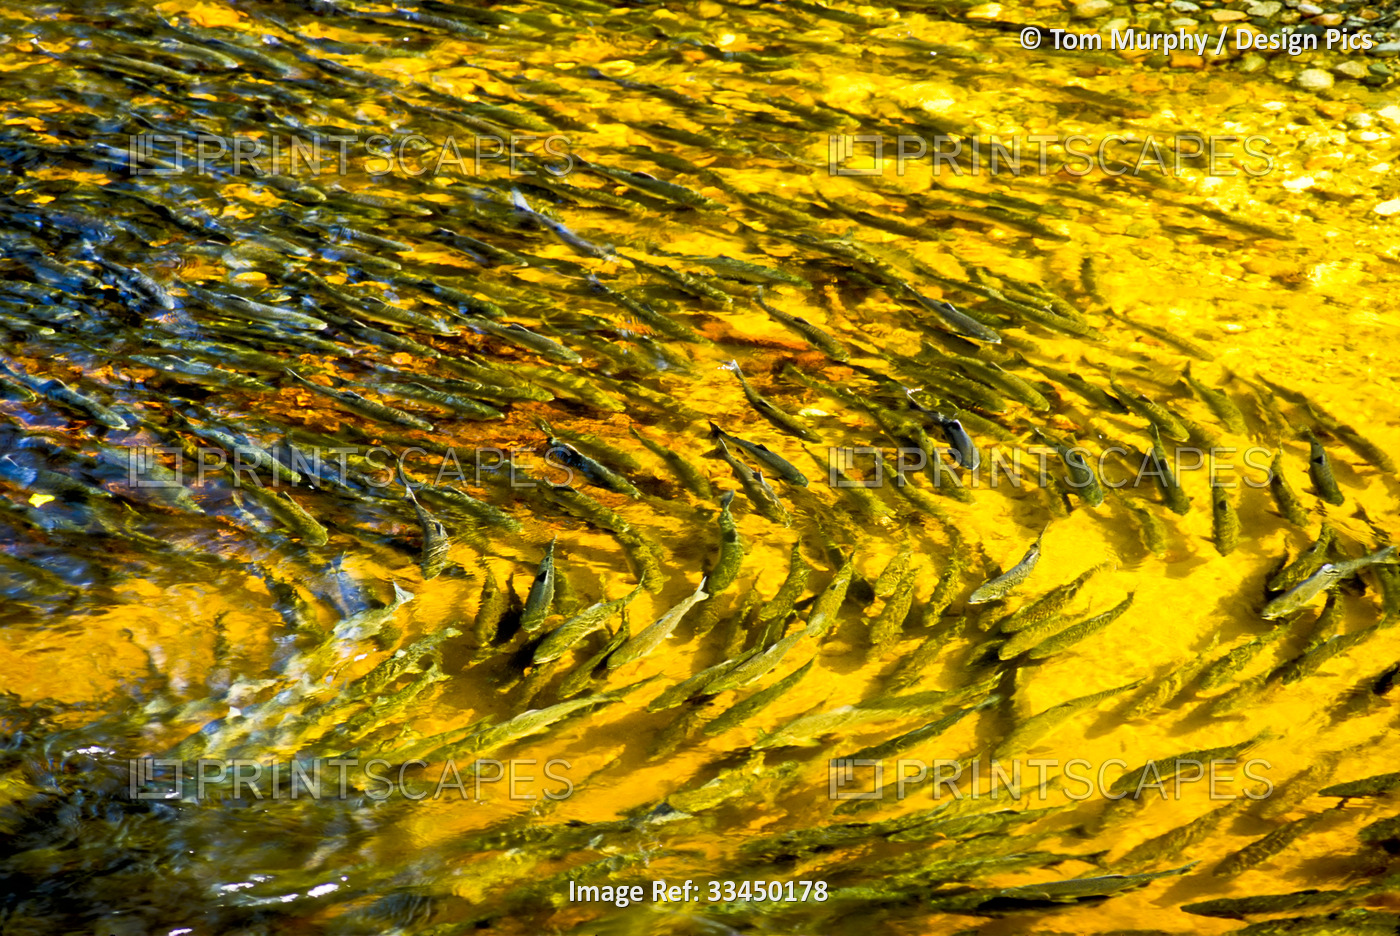 Swirling pattern of salmon (Oncorhynchus) swimming in a clear, water stream ...